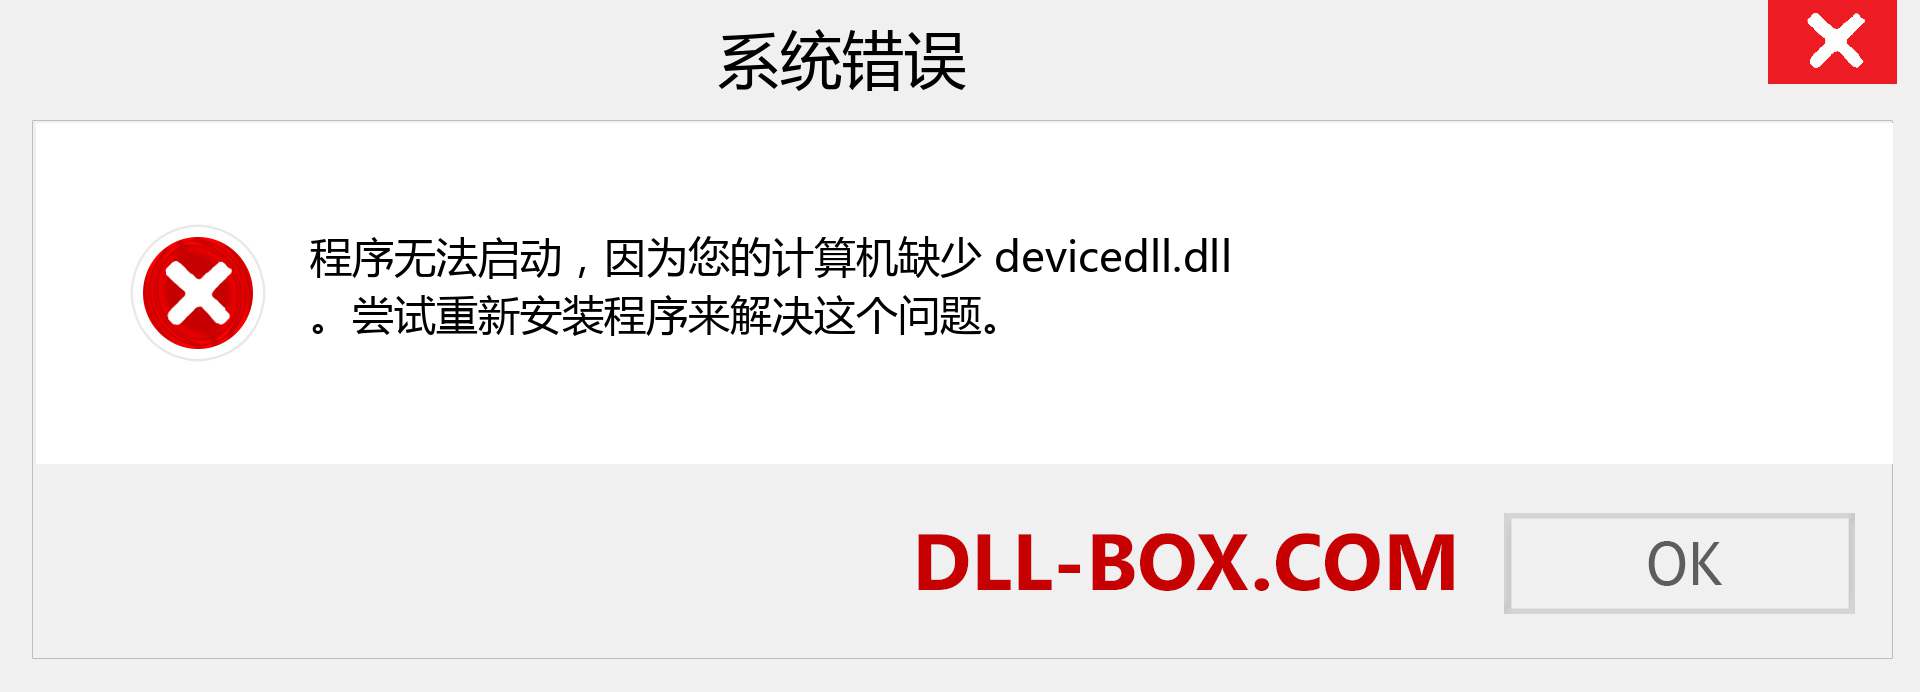 devicedll.dll 文件丢失？。 适用于 Windows 7、8、10 的下载 - 修复 Windows、照片、图像上的 devicedll dll 丢失错误